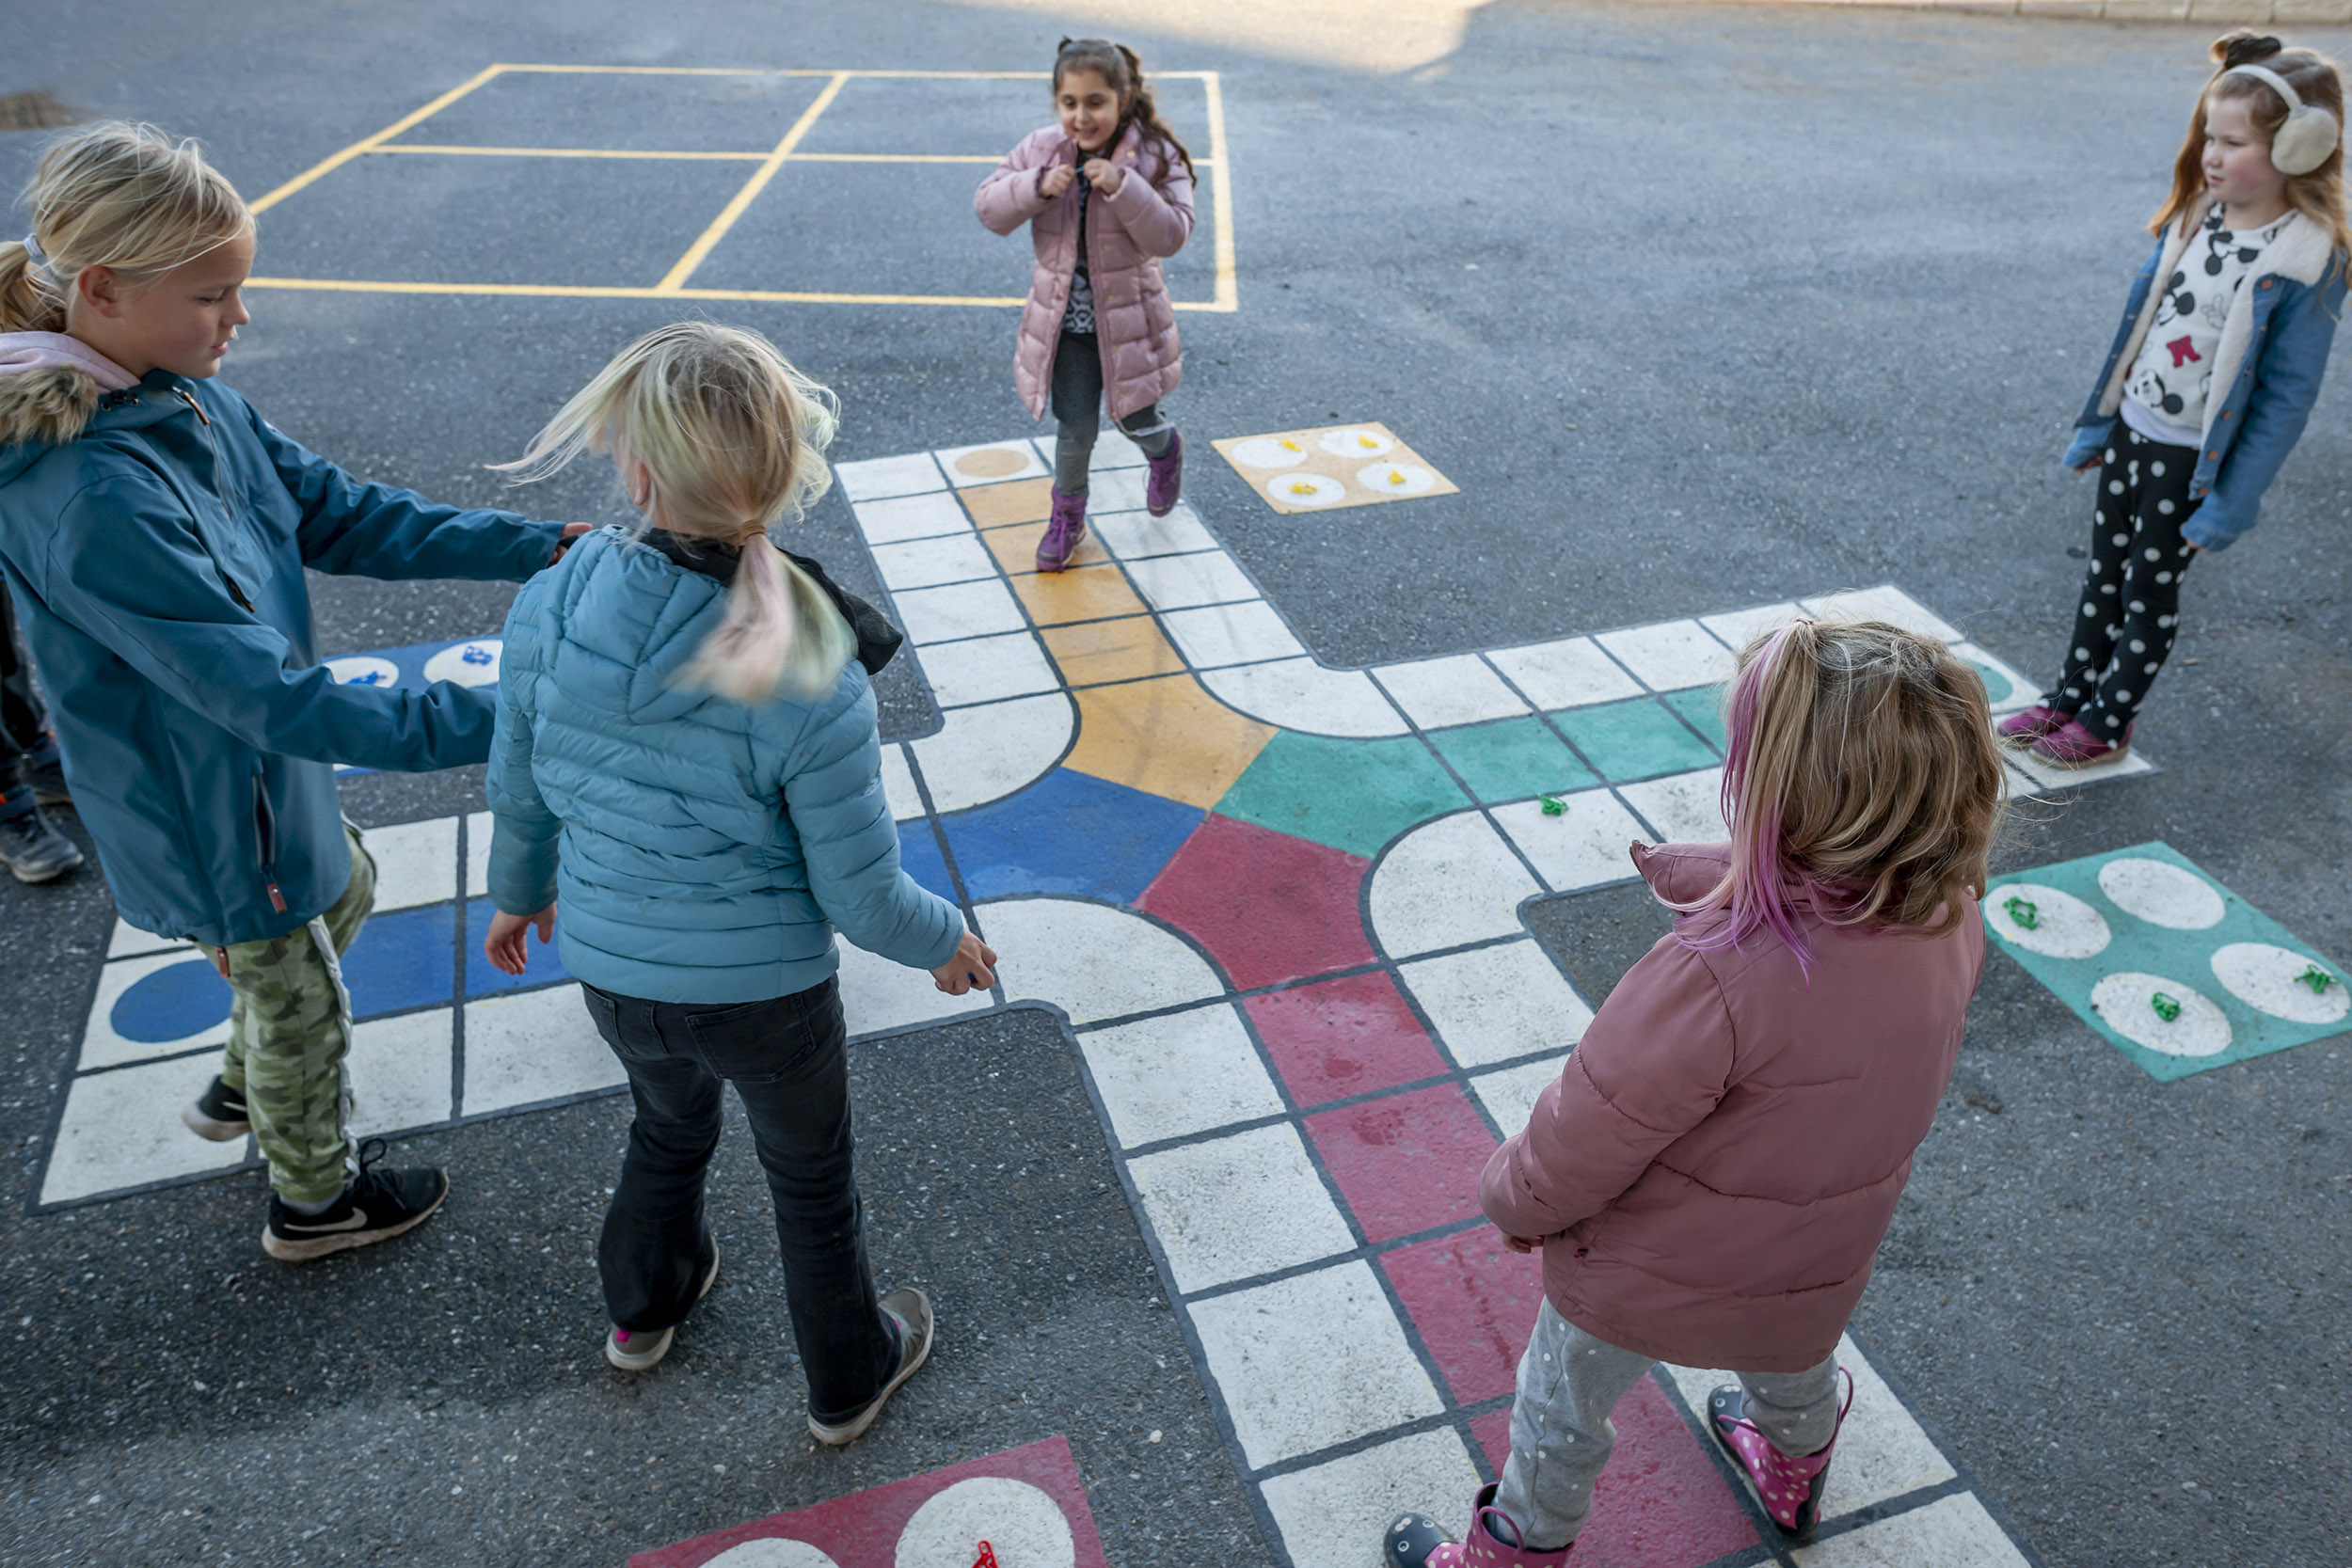 barn lærer i skolegård på oppmerket asfalt formet som ludo-spill.